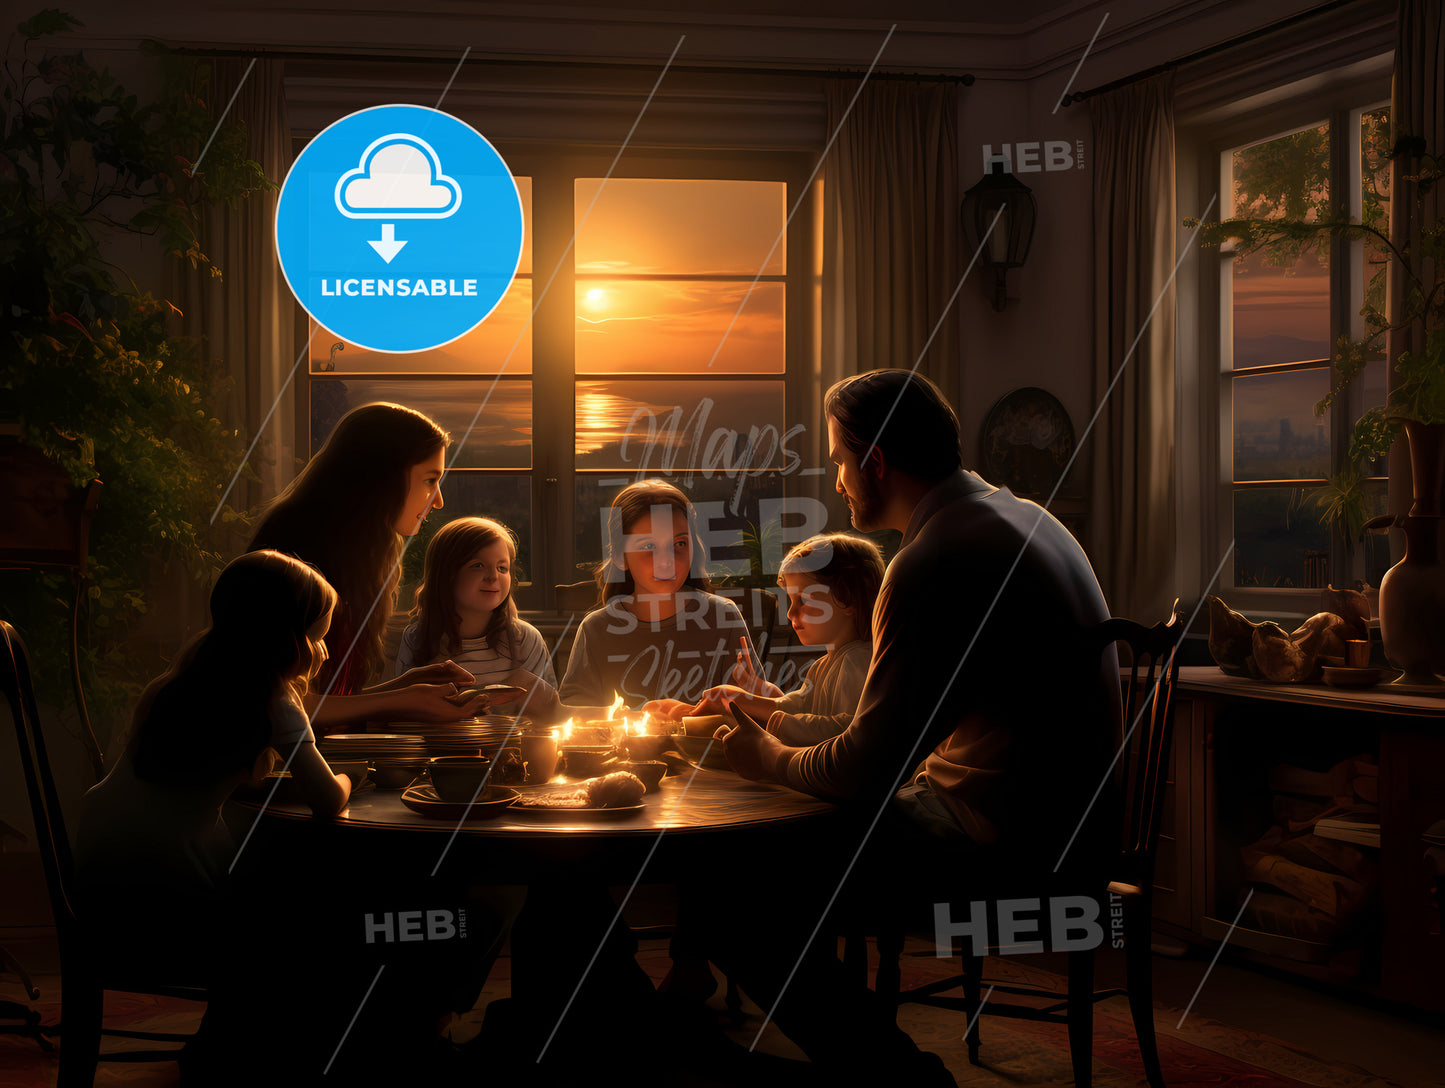 A Seemingly Harmonious, A Family Sitting Around A Table